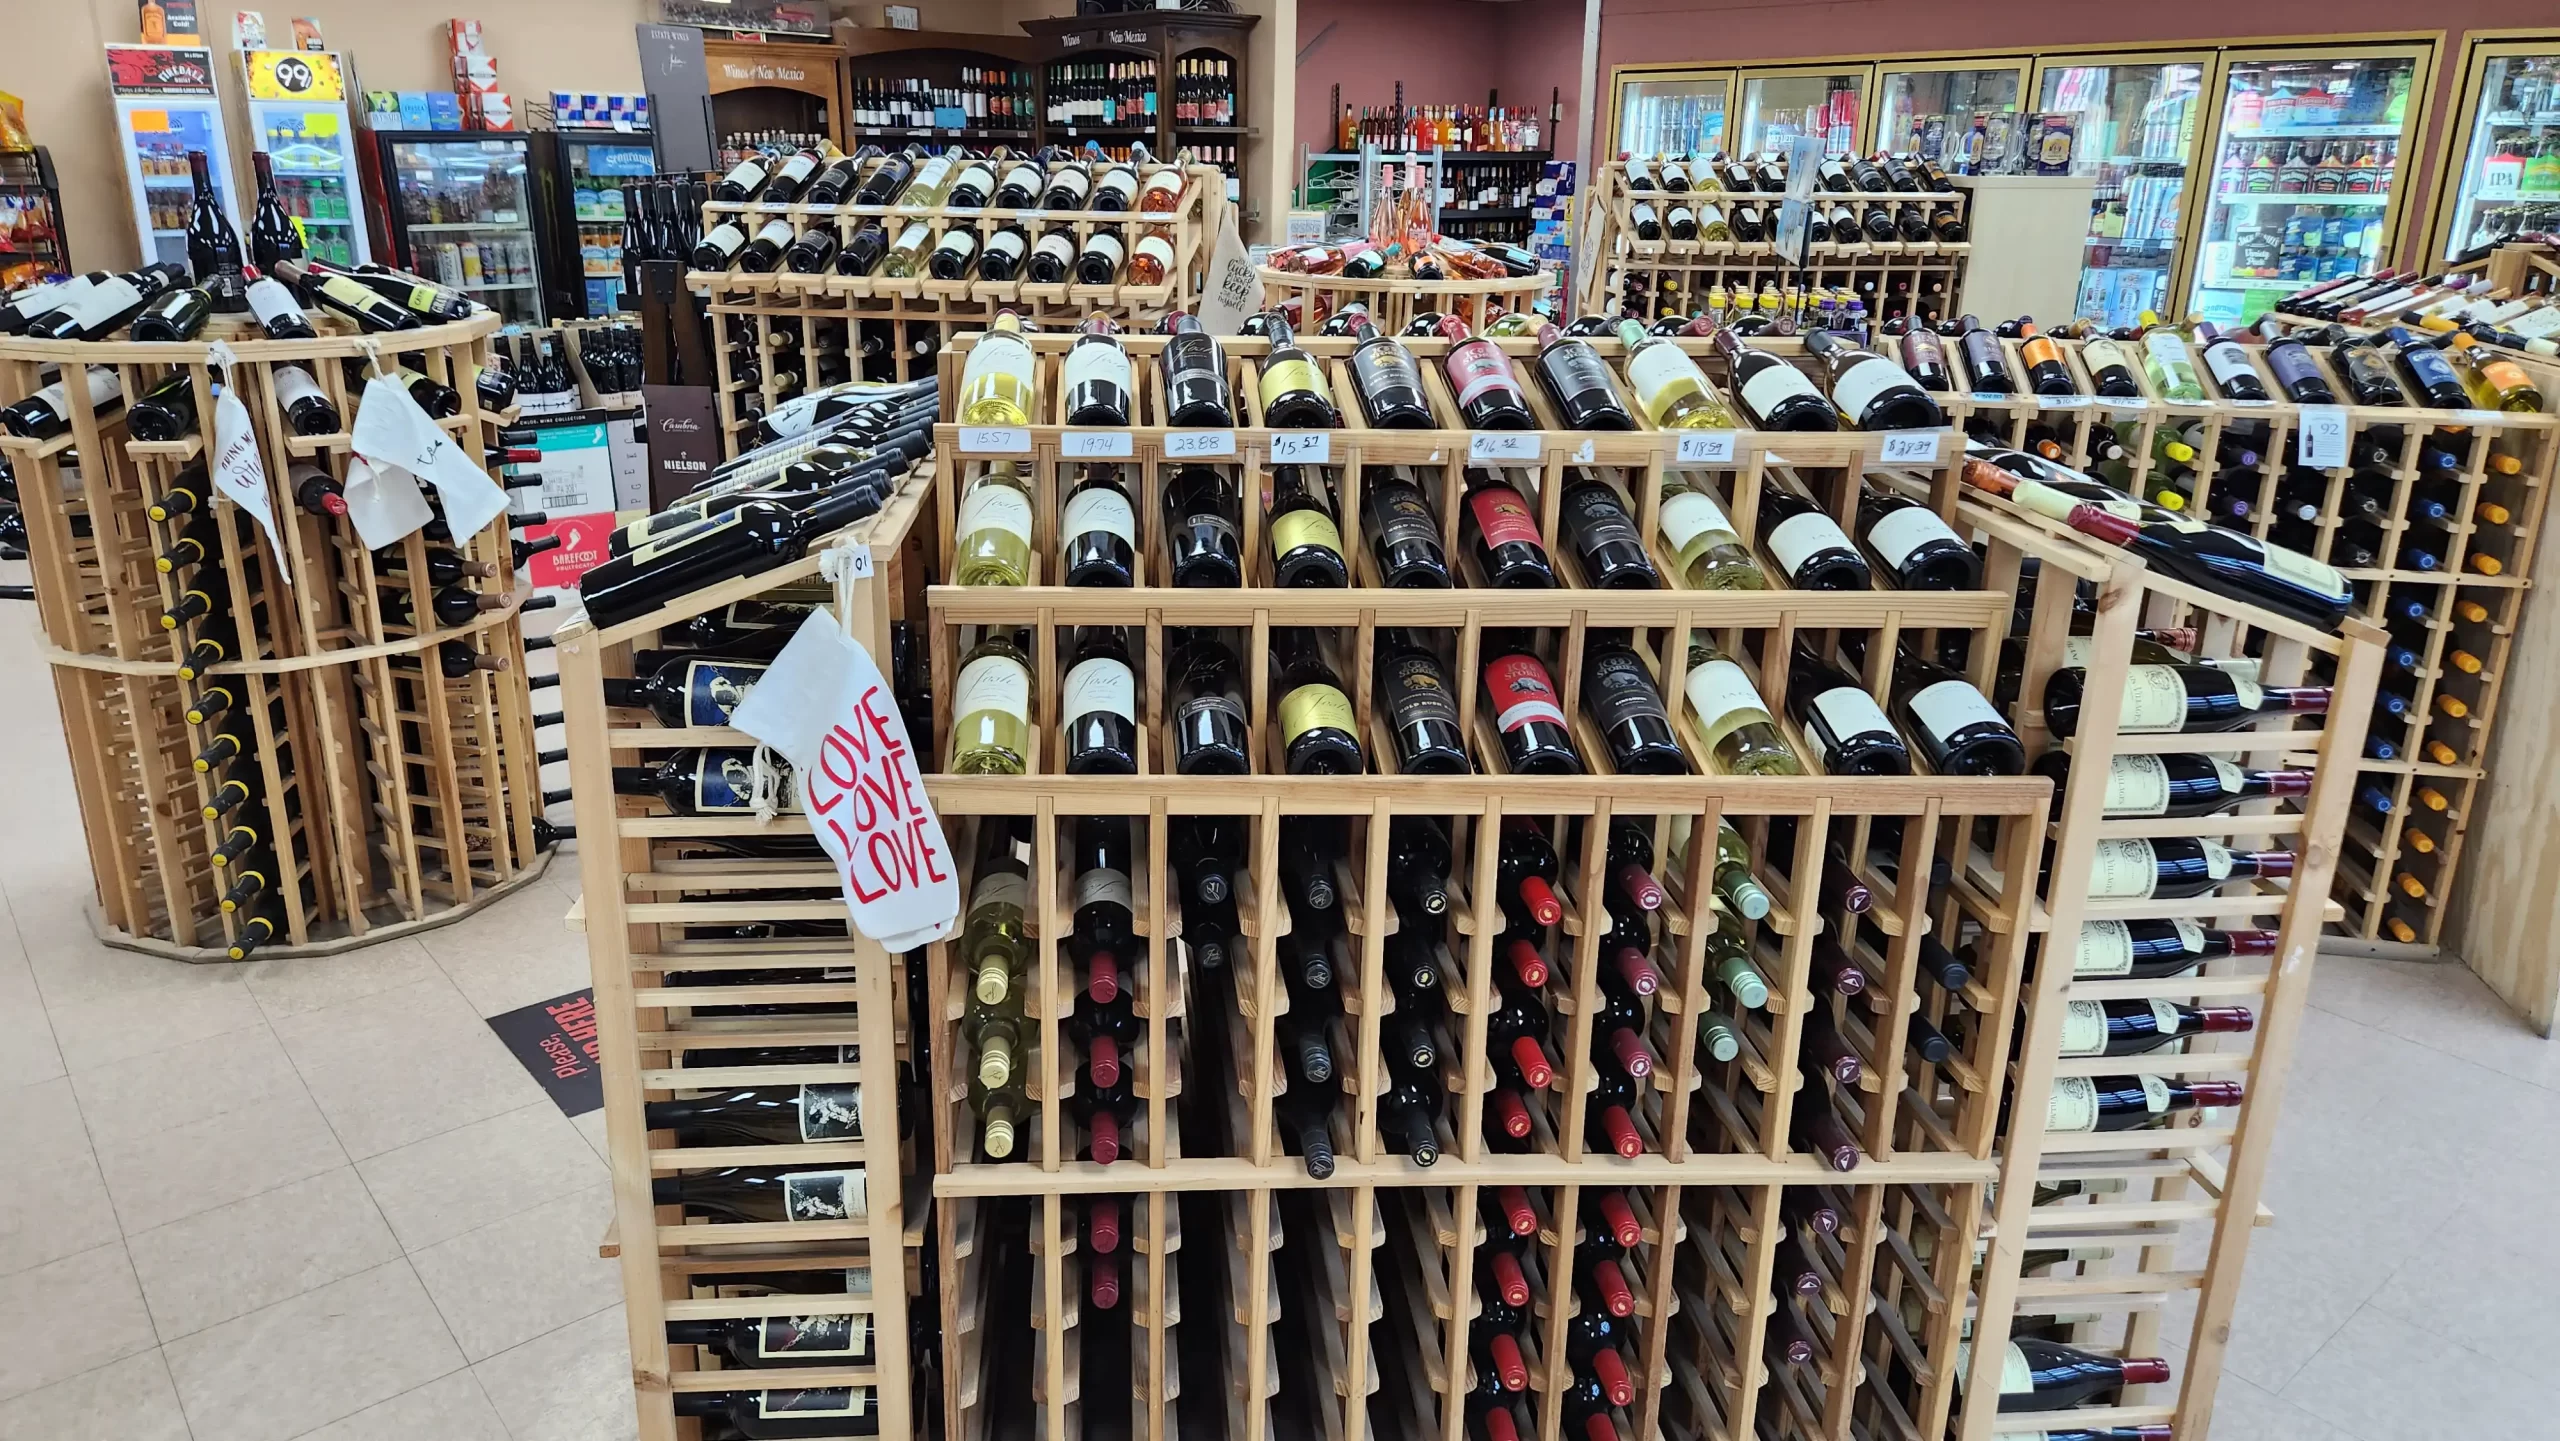 Wine Selection